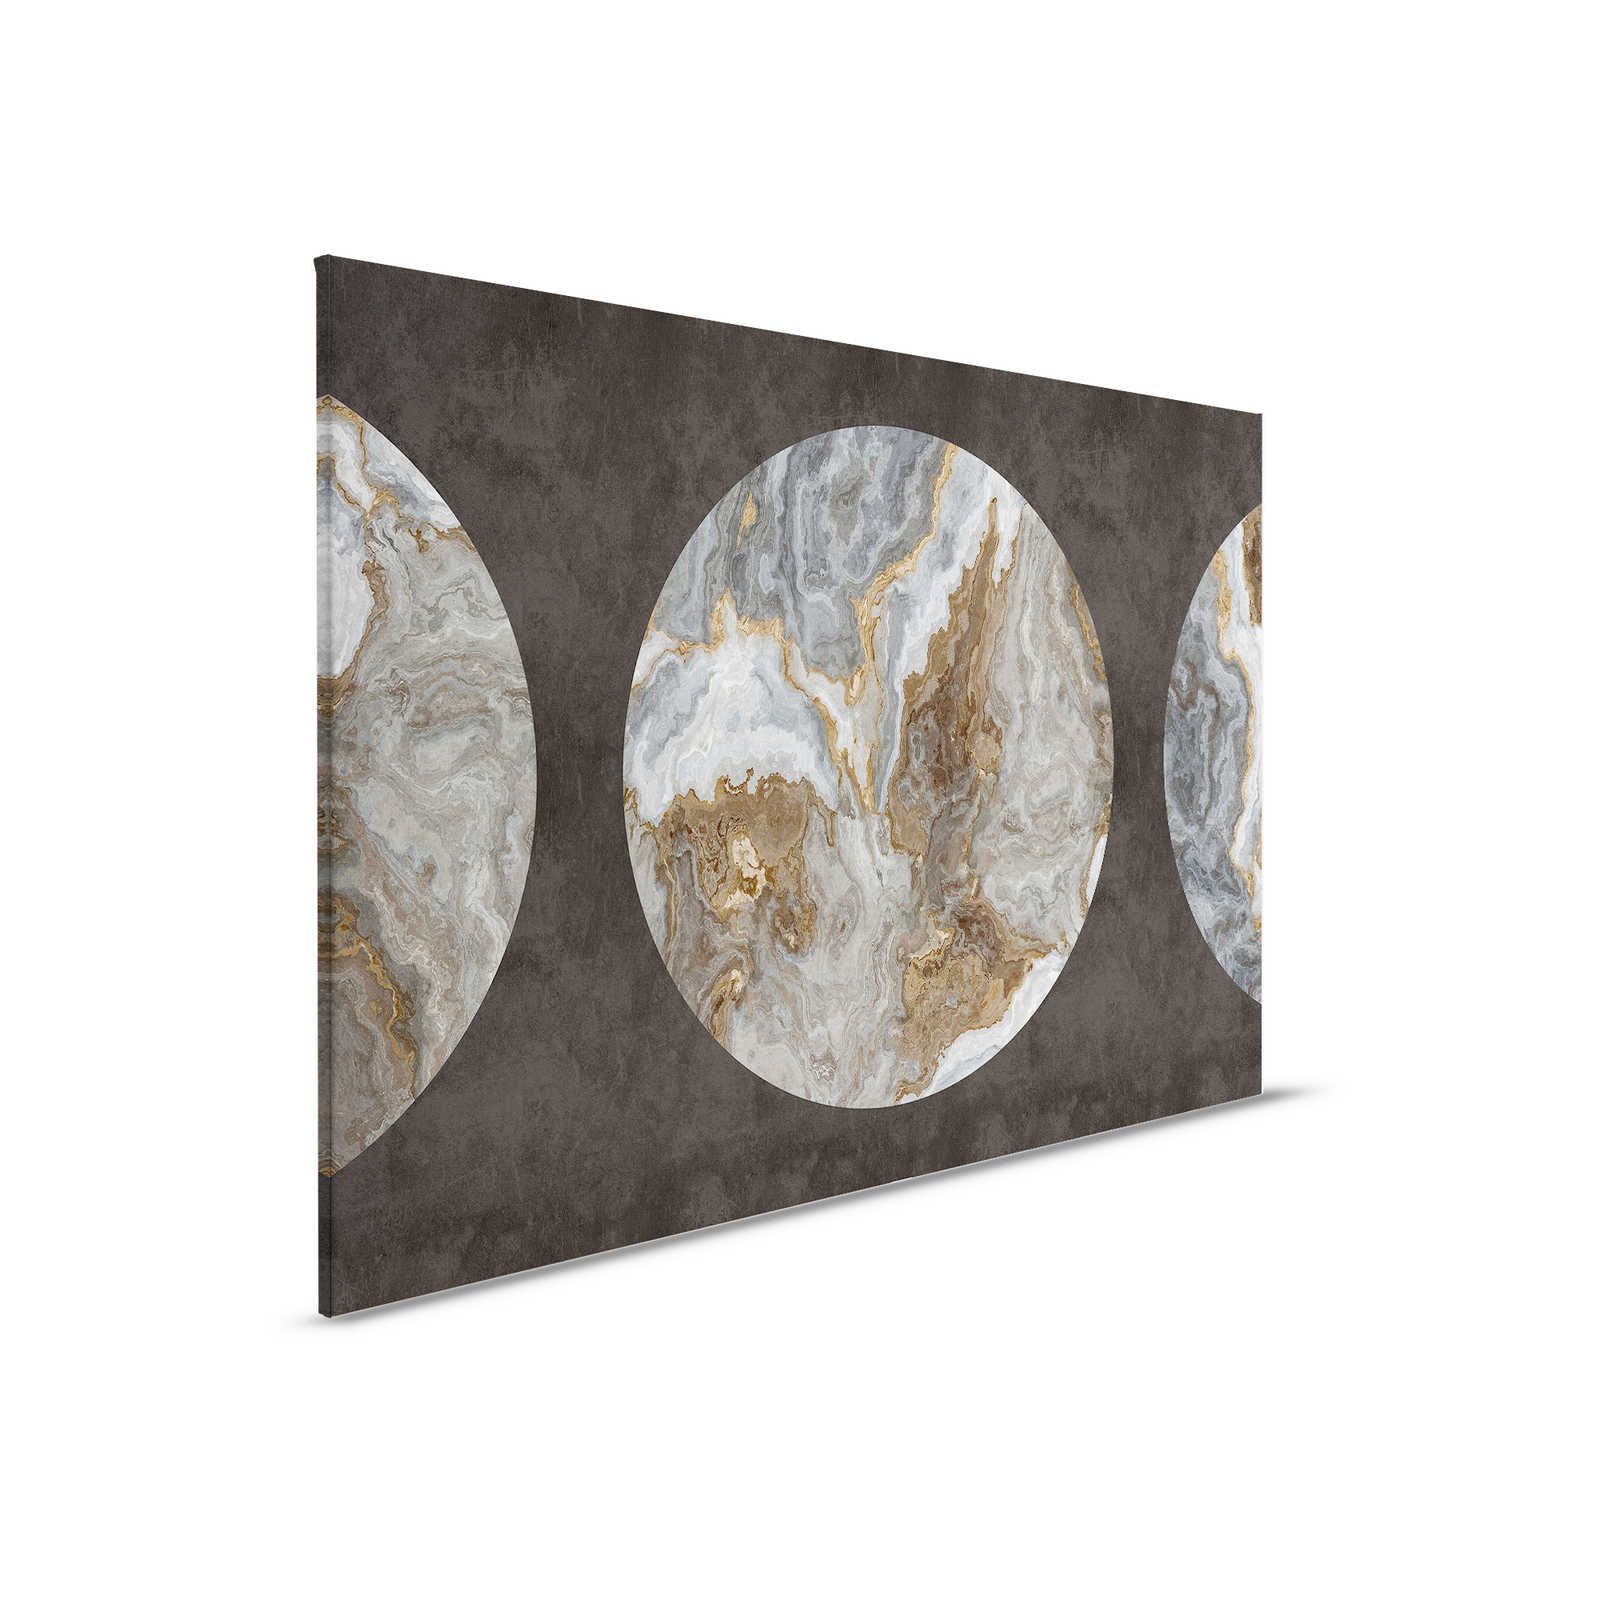         Luna 1 - Marble Canvas Painting Circle Design & Black Plaster Look - 0.90 m x 0.60 m
    